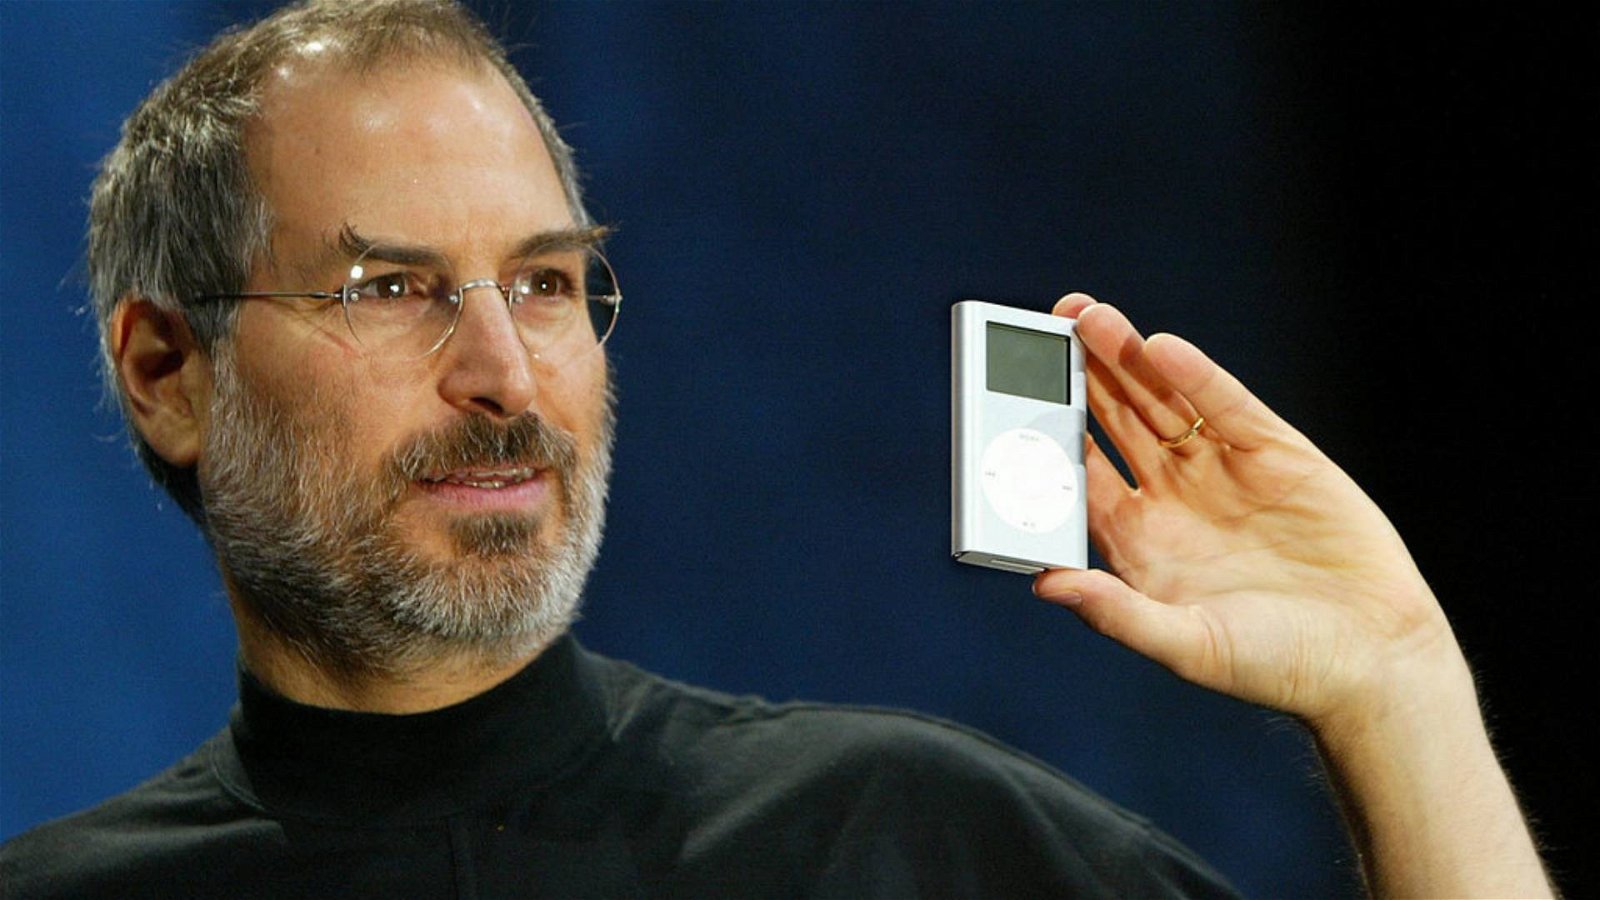 Immagine di Messa all'asta in NFT una domanda di lavoro di Steve Jobs